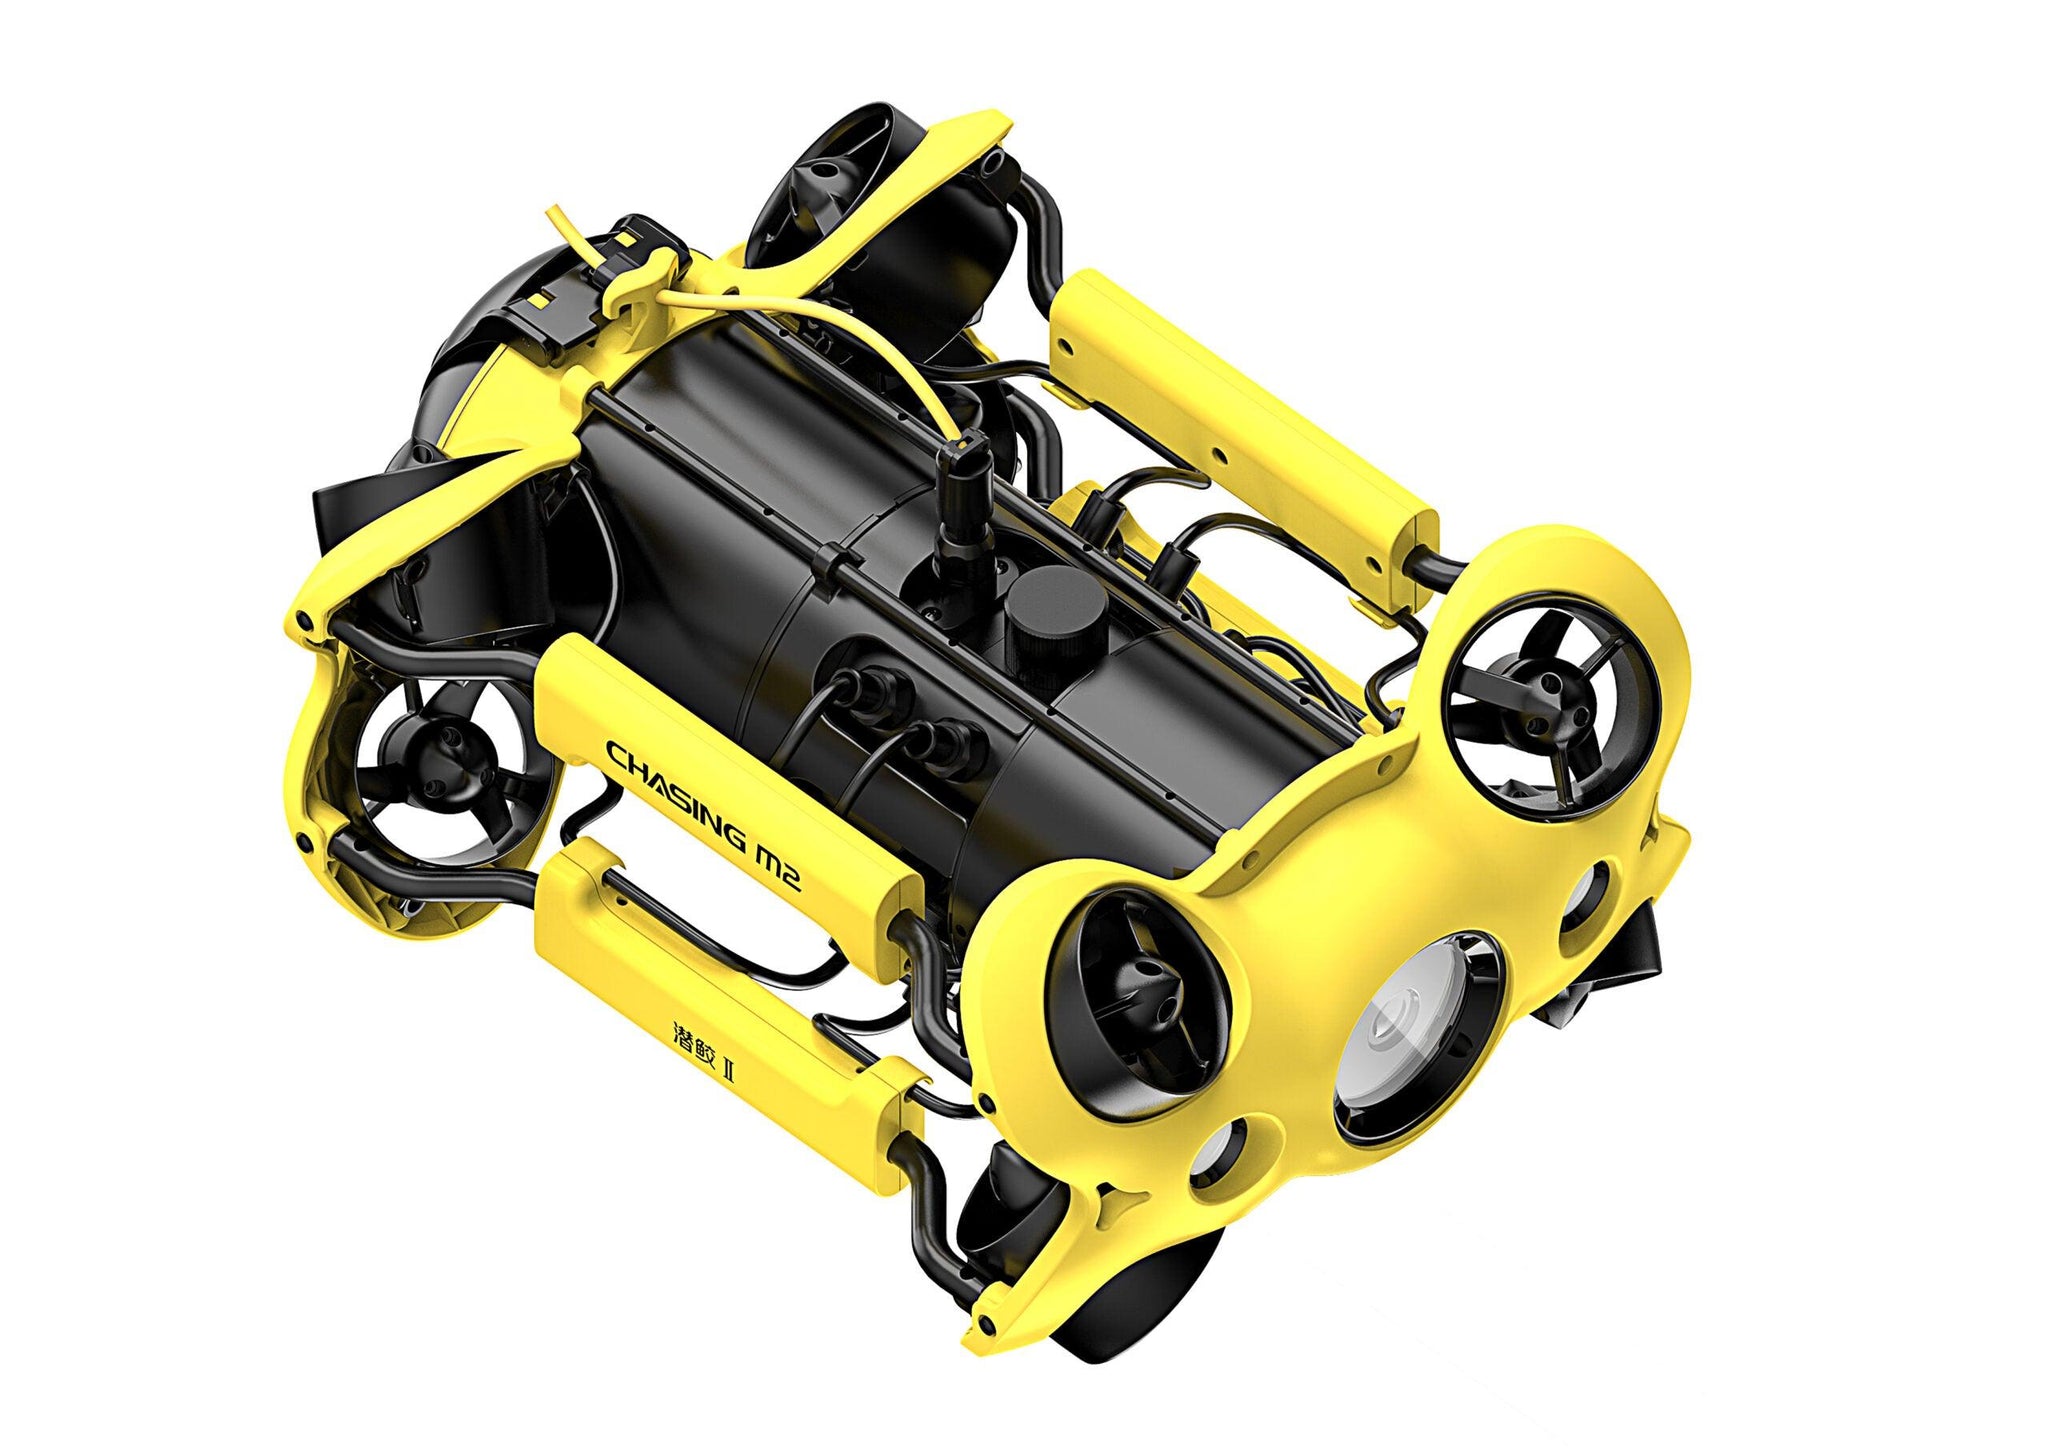 SeaLion 2 Underwater Drone / Submersible ROV – Influential Drones